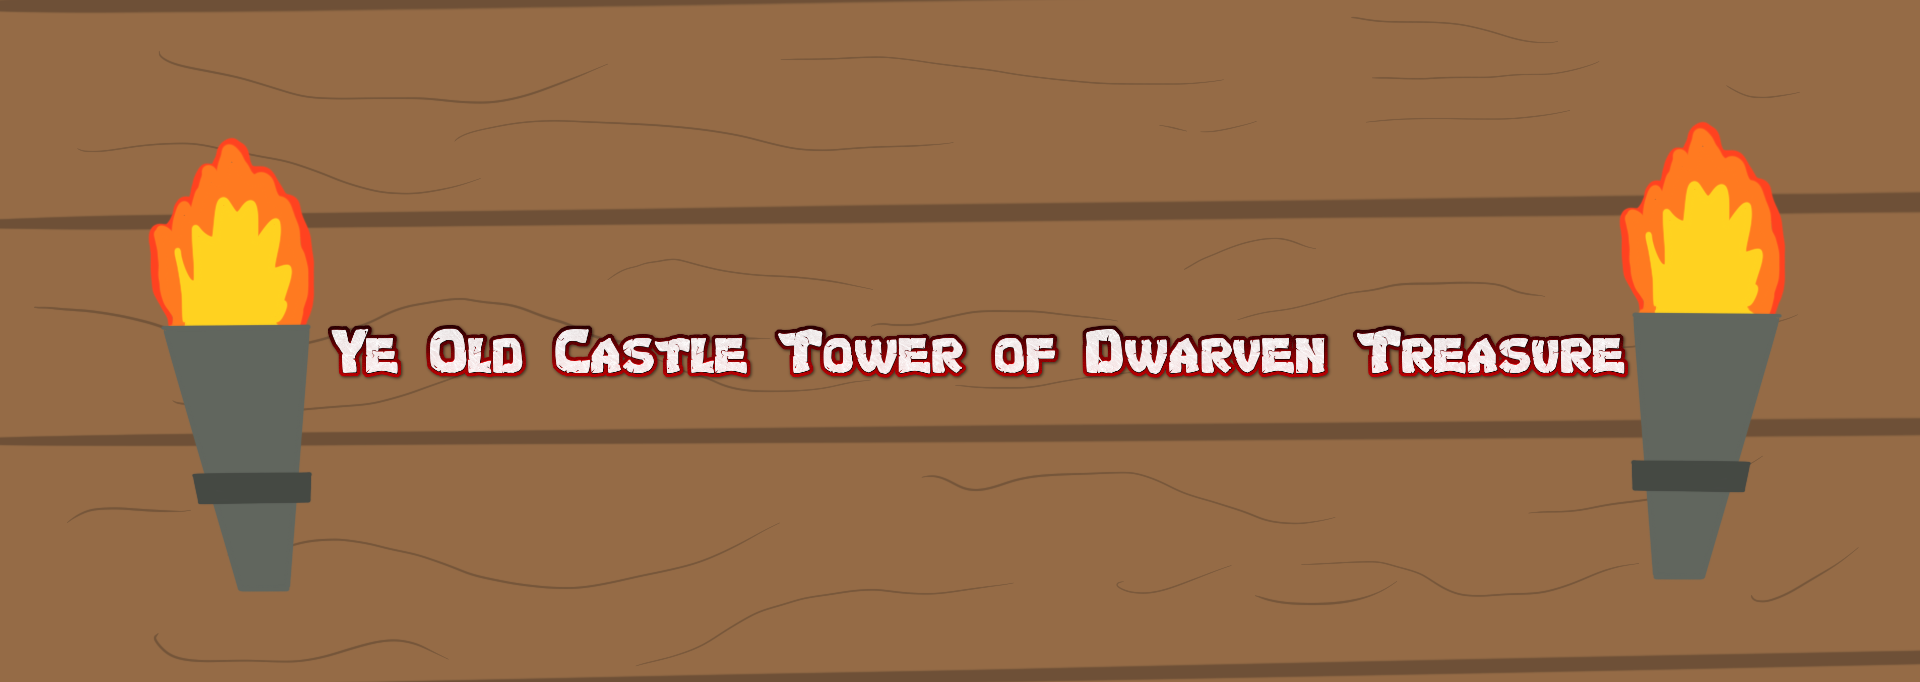 Ye Old Castle Tower of Dwarven Treasure